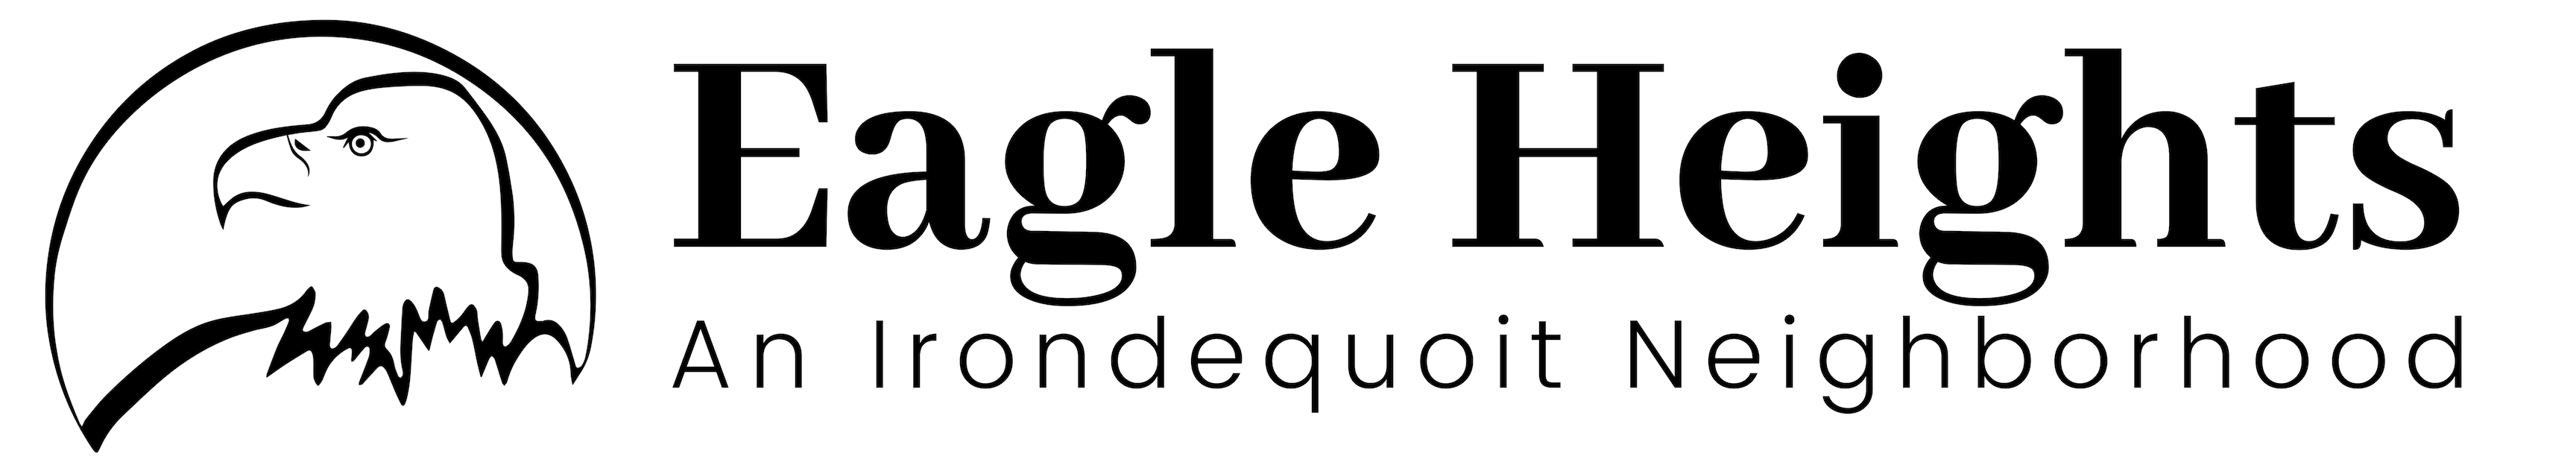 Eagle Heights NA logo